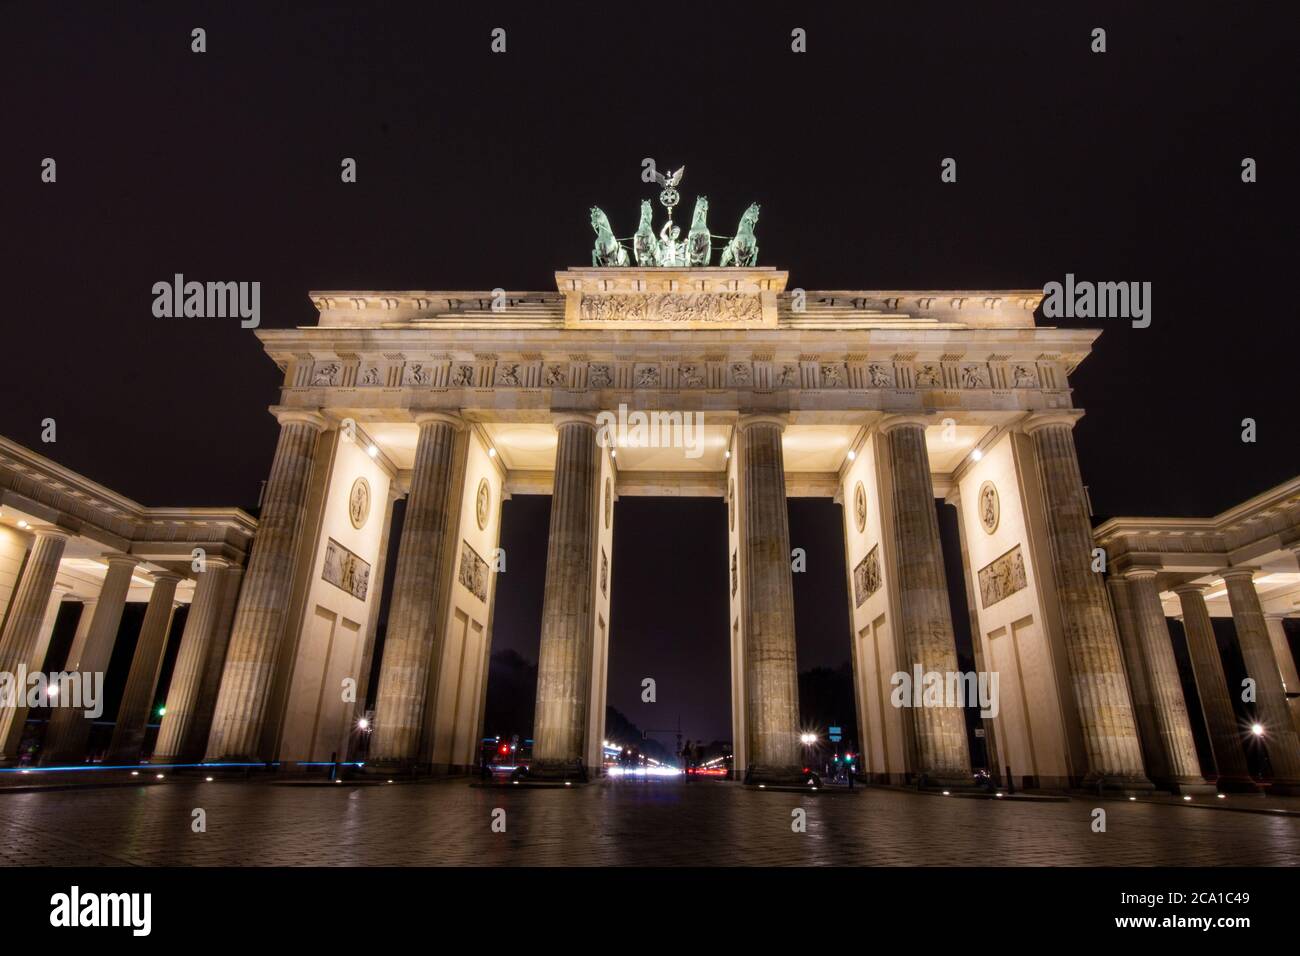 Berlin Brandenburg Gate (Brandenburger Tor) at night in Berlin, Germany. Stock Photo